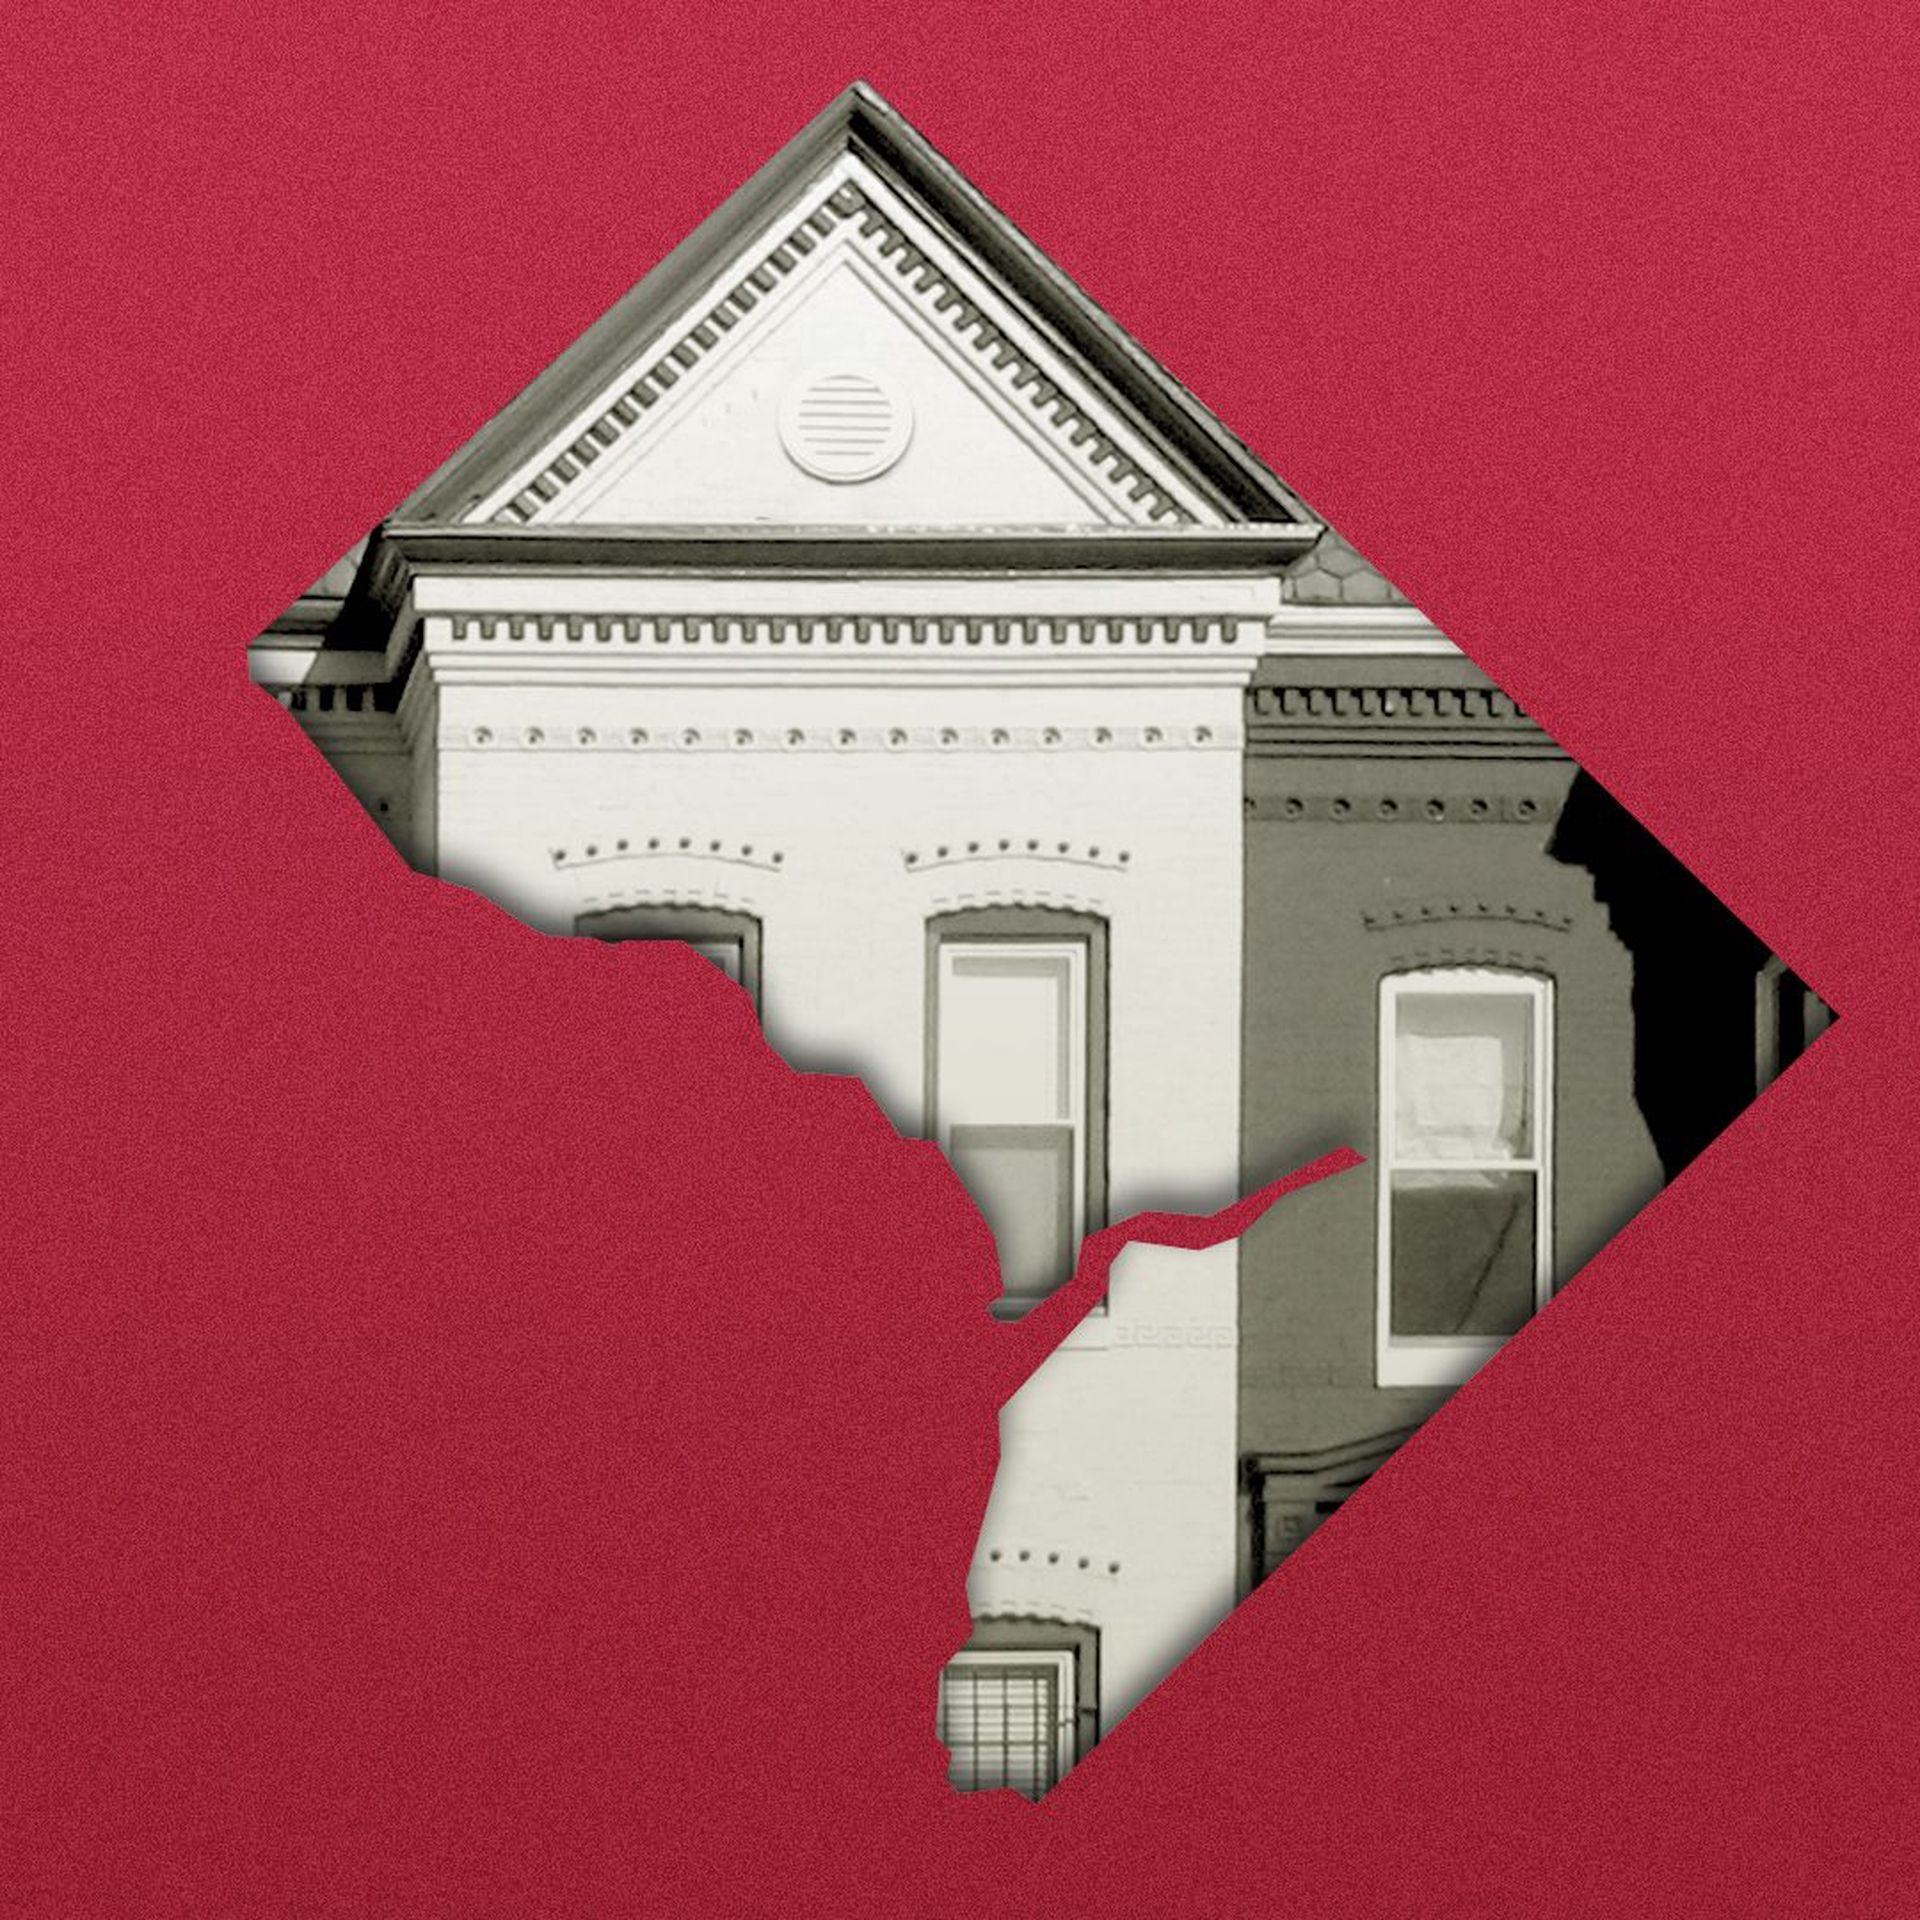 Illustration of row houses masked by the shape of Washington D.C. 